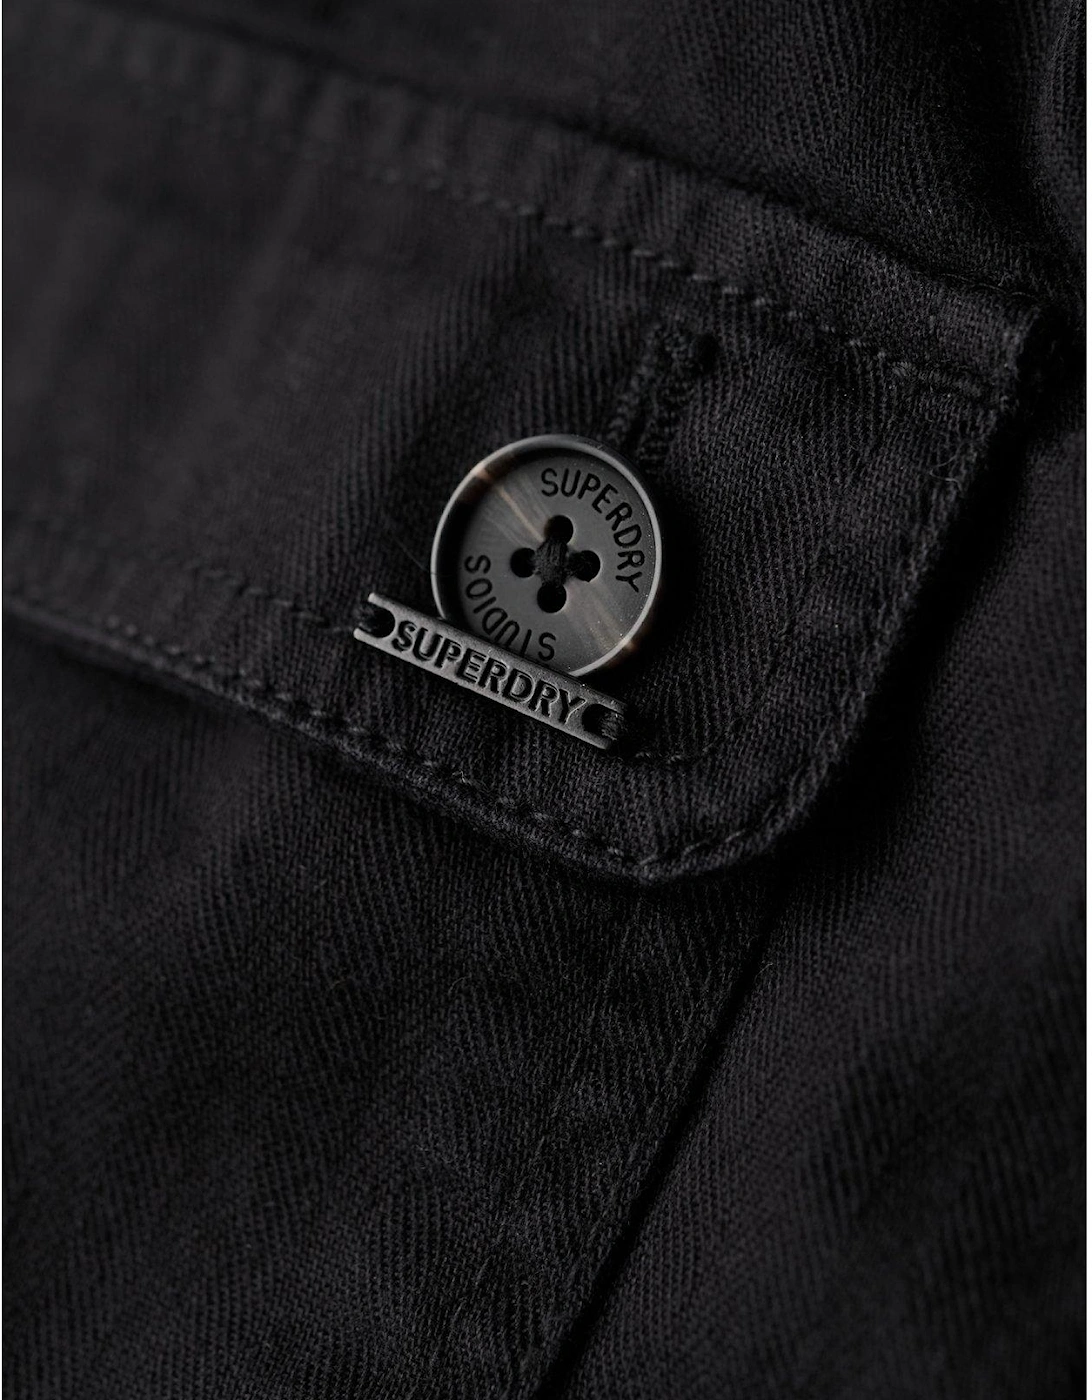 Cotton Belted Safari Jacket - Black